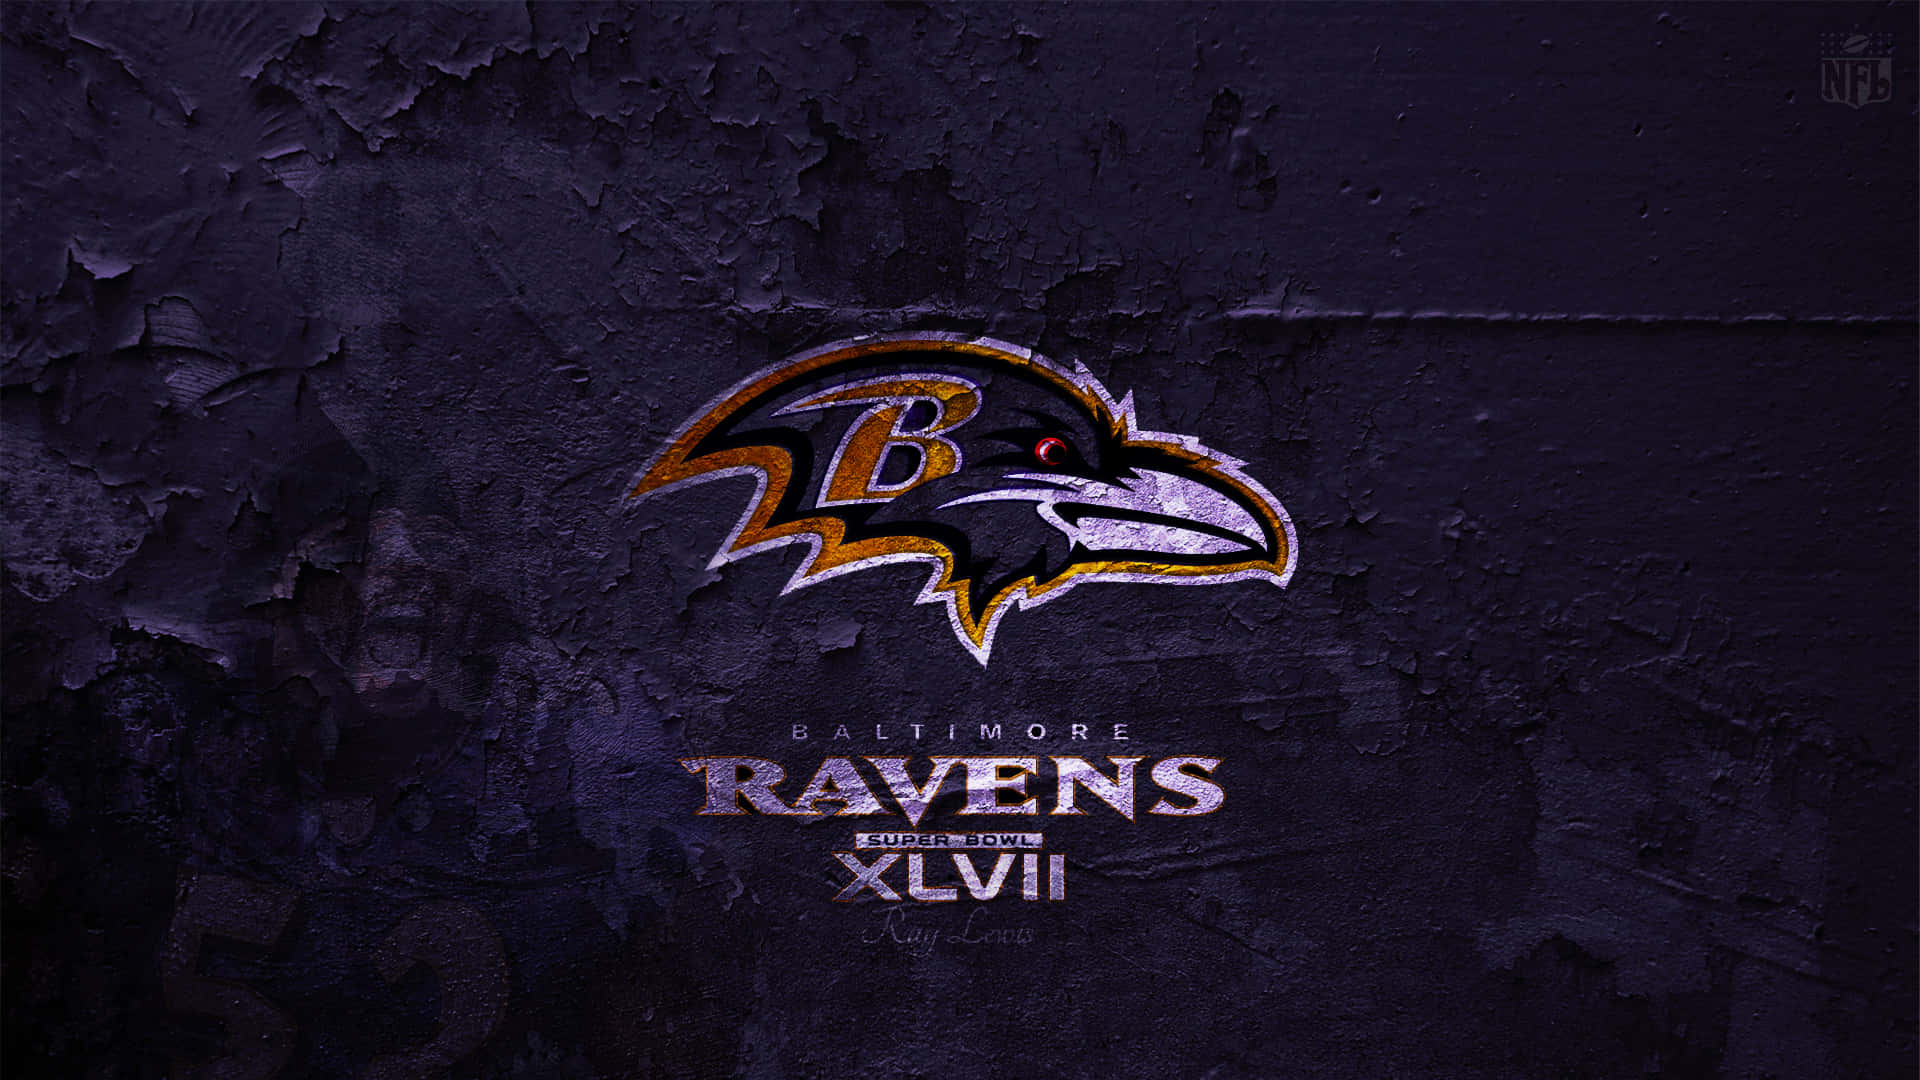 Show your Baltimore Ravens pride!